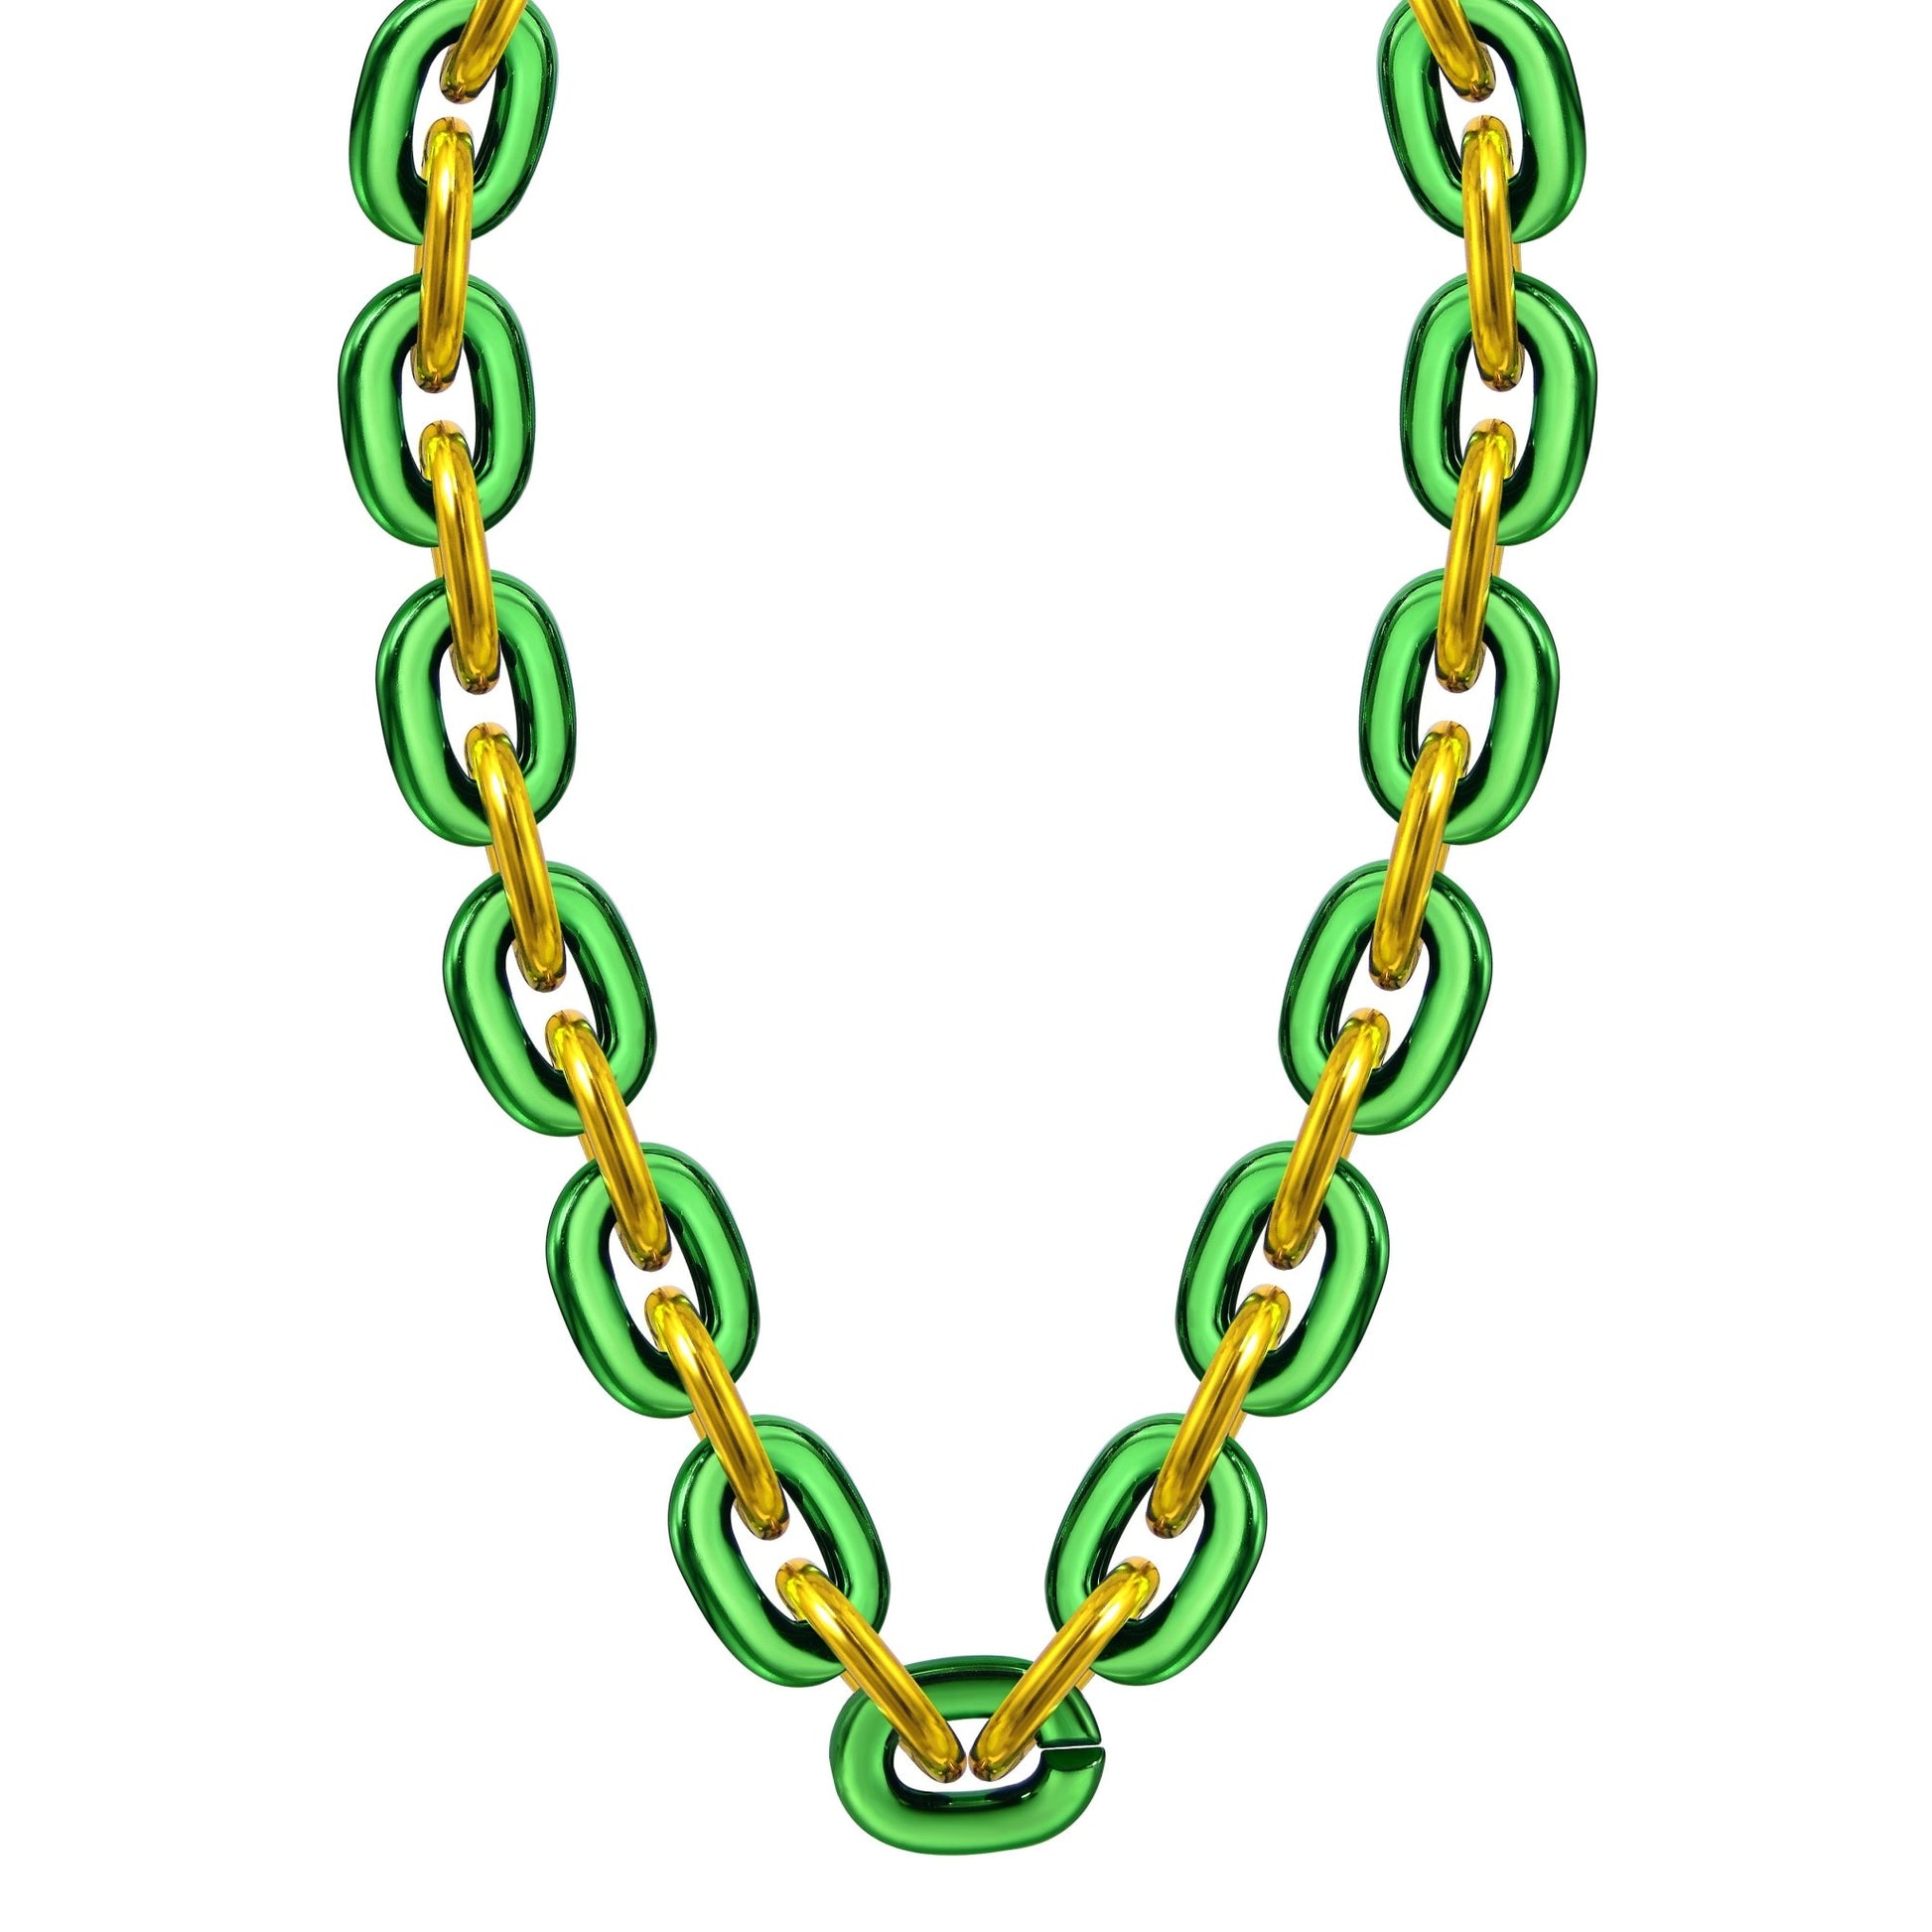 Jumbo Fan Chain Necklace - Gamedays Gear - Green / Gold